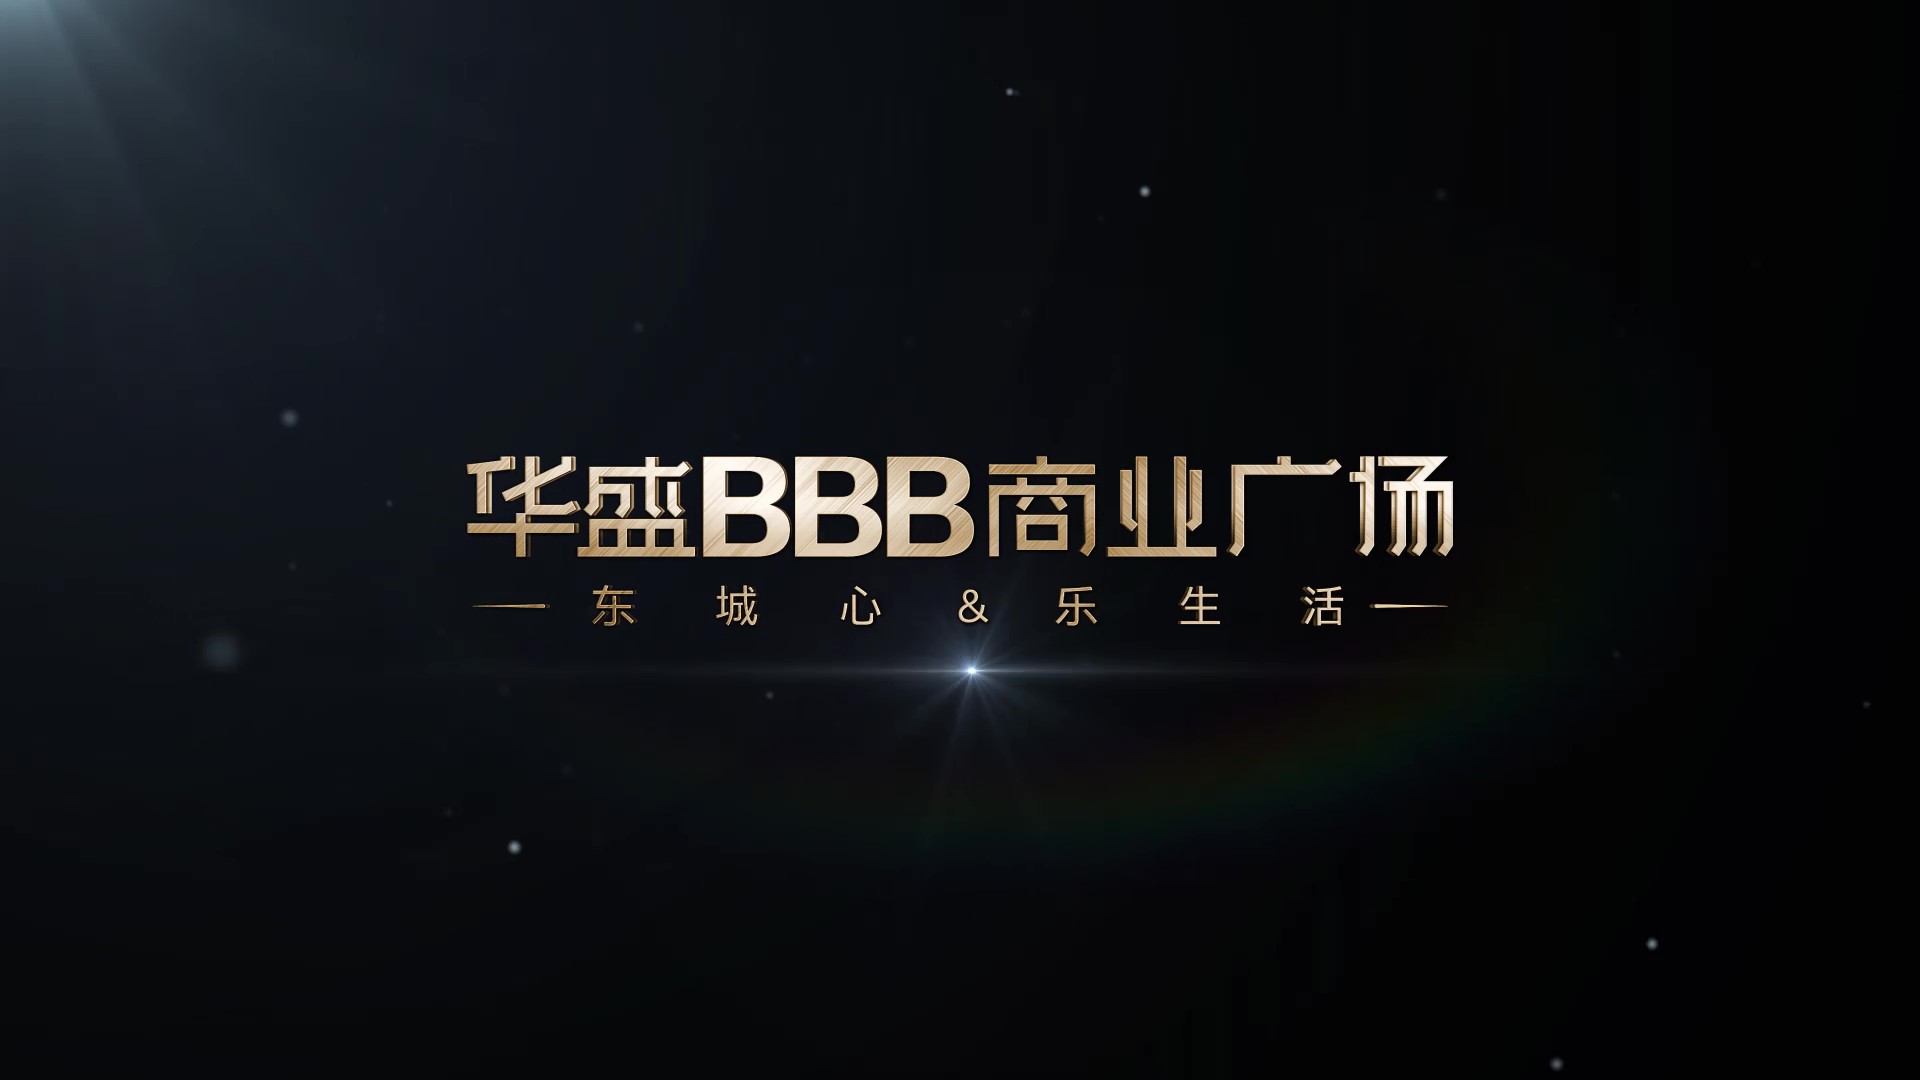 jbo竞博电竞BBB商业广场宣传片